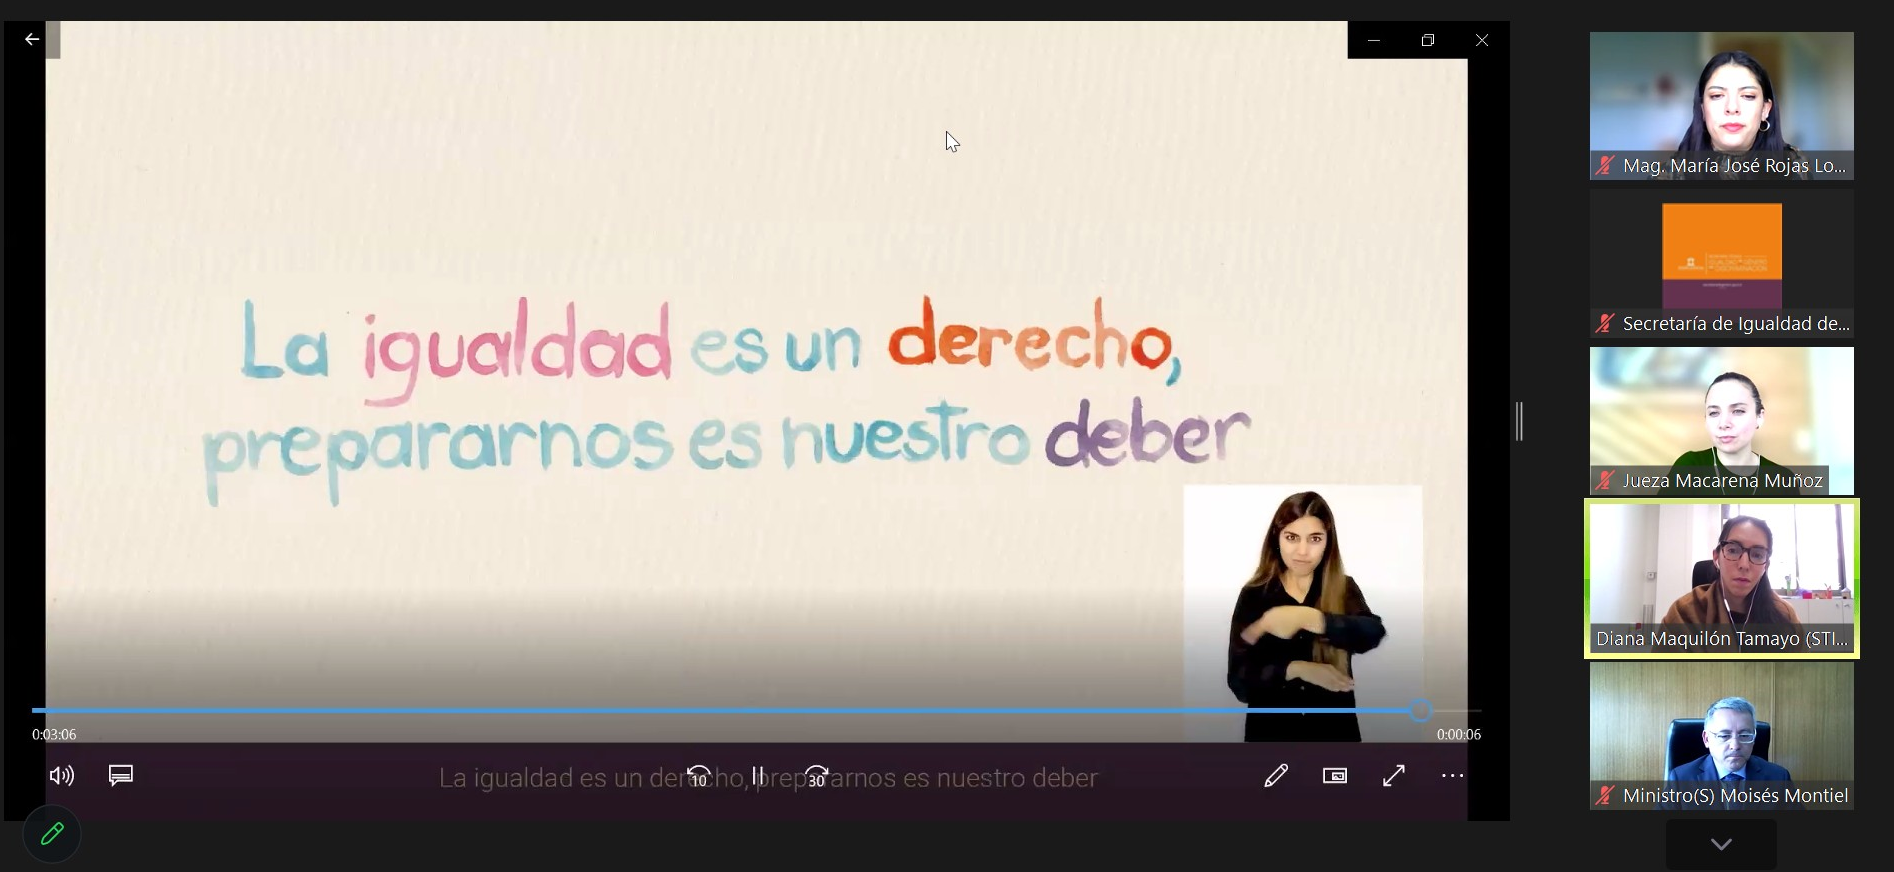 Comité de Género de Puerto Montt organizó charla sobre el Manual para el uso del lenguaje inclusivo no sexista del Poder Judicial de Chile 